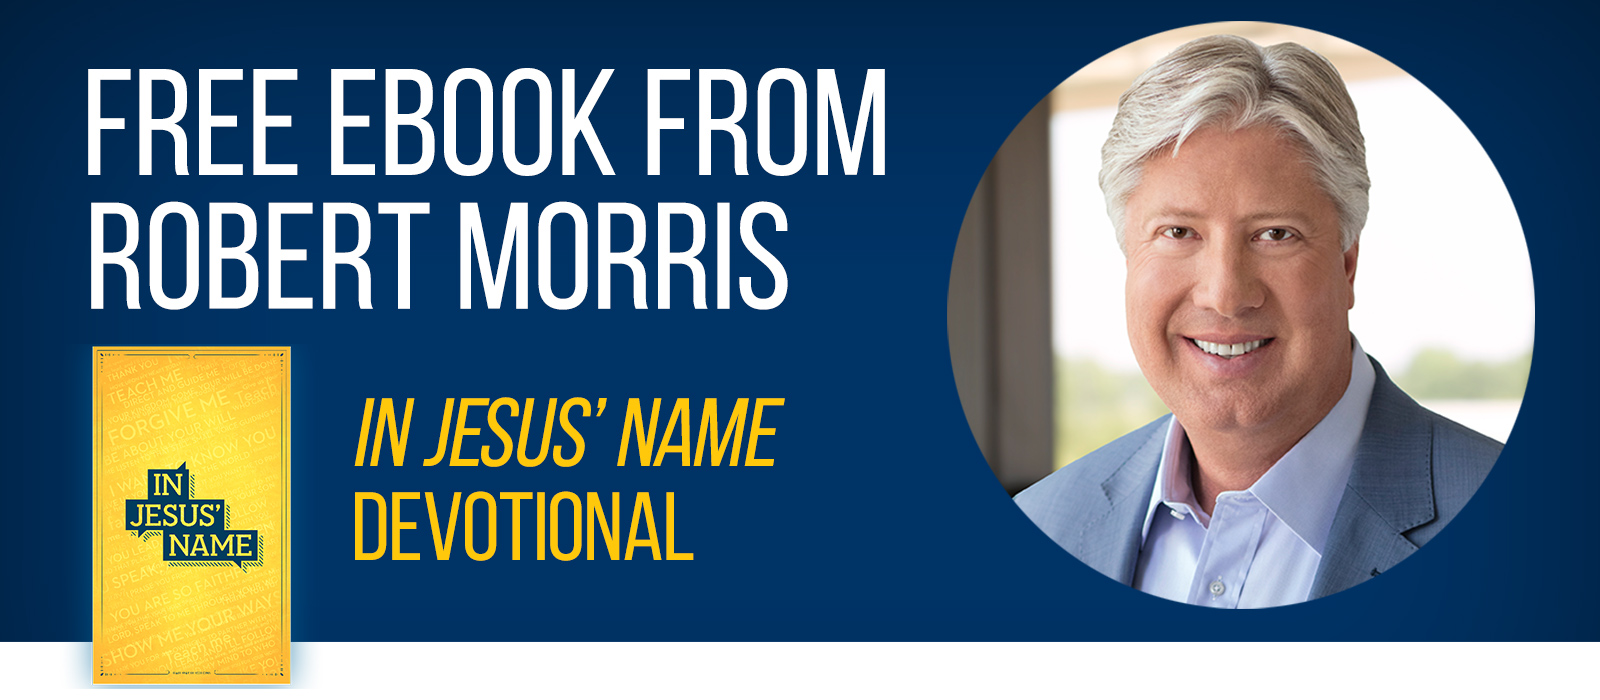 FREE Book from Robert Morris - In Jesus' Name Devotional